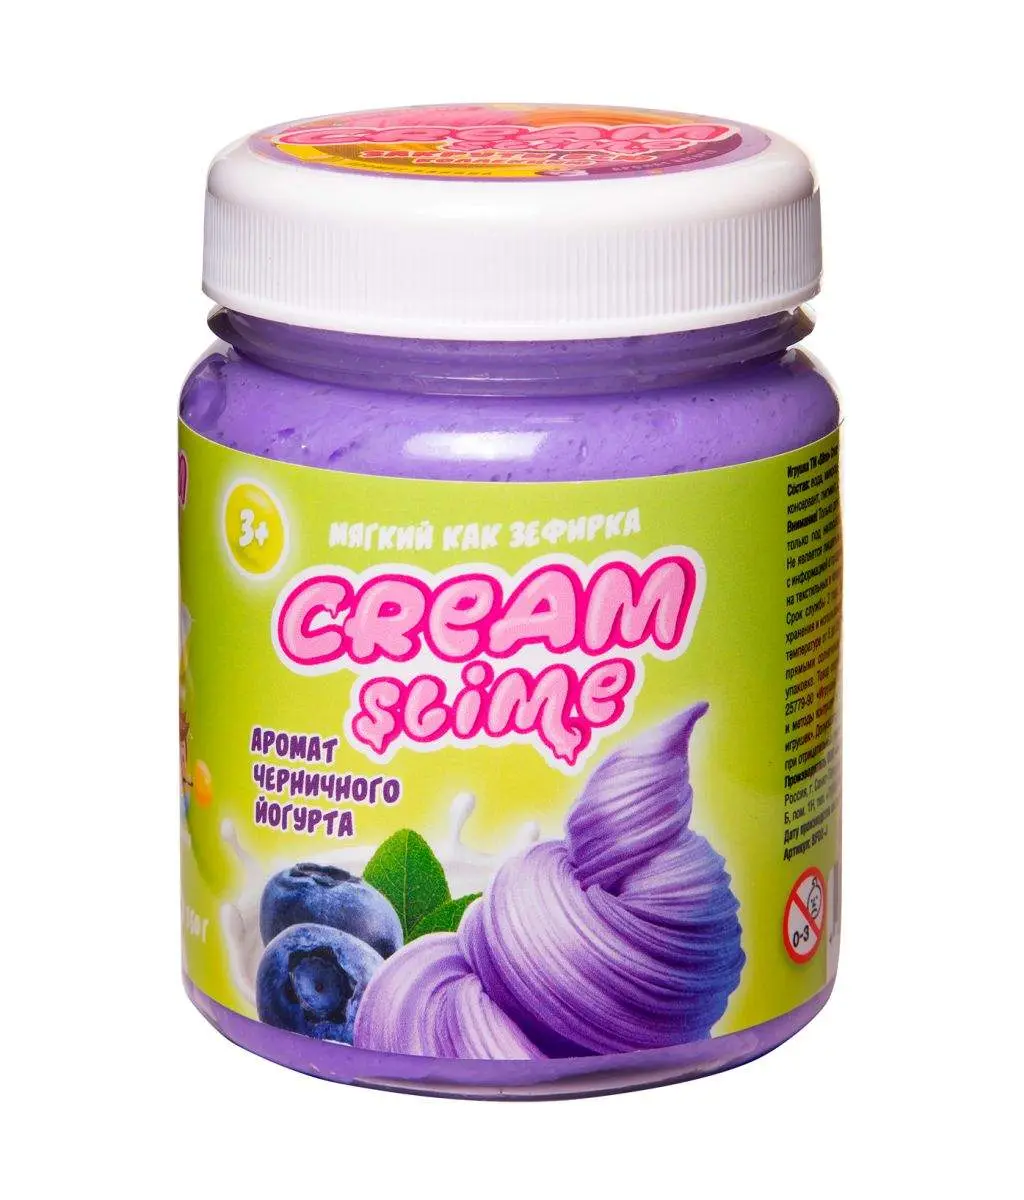 Cream-Slime с ароматом черничного йогурта